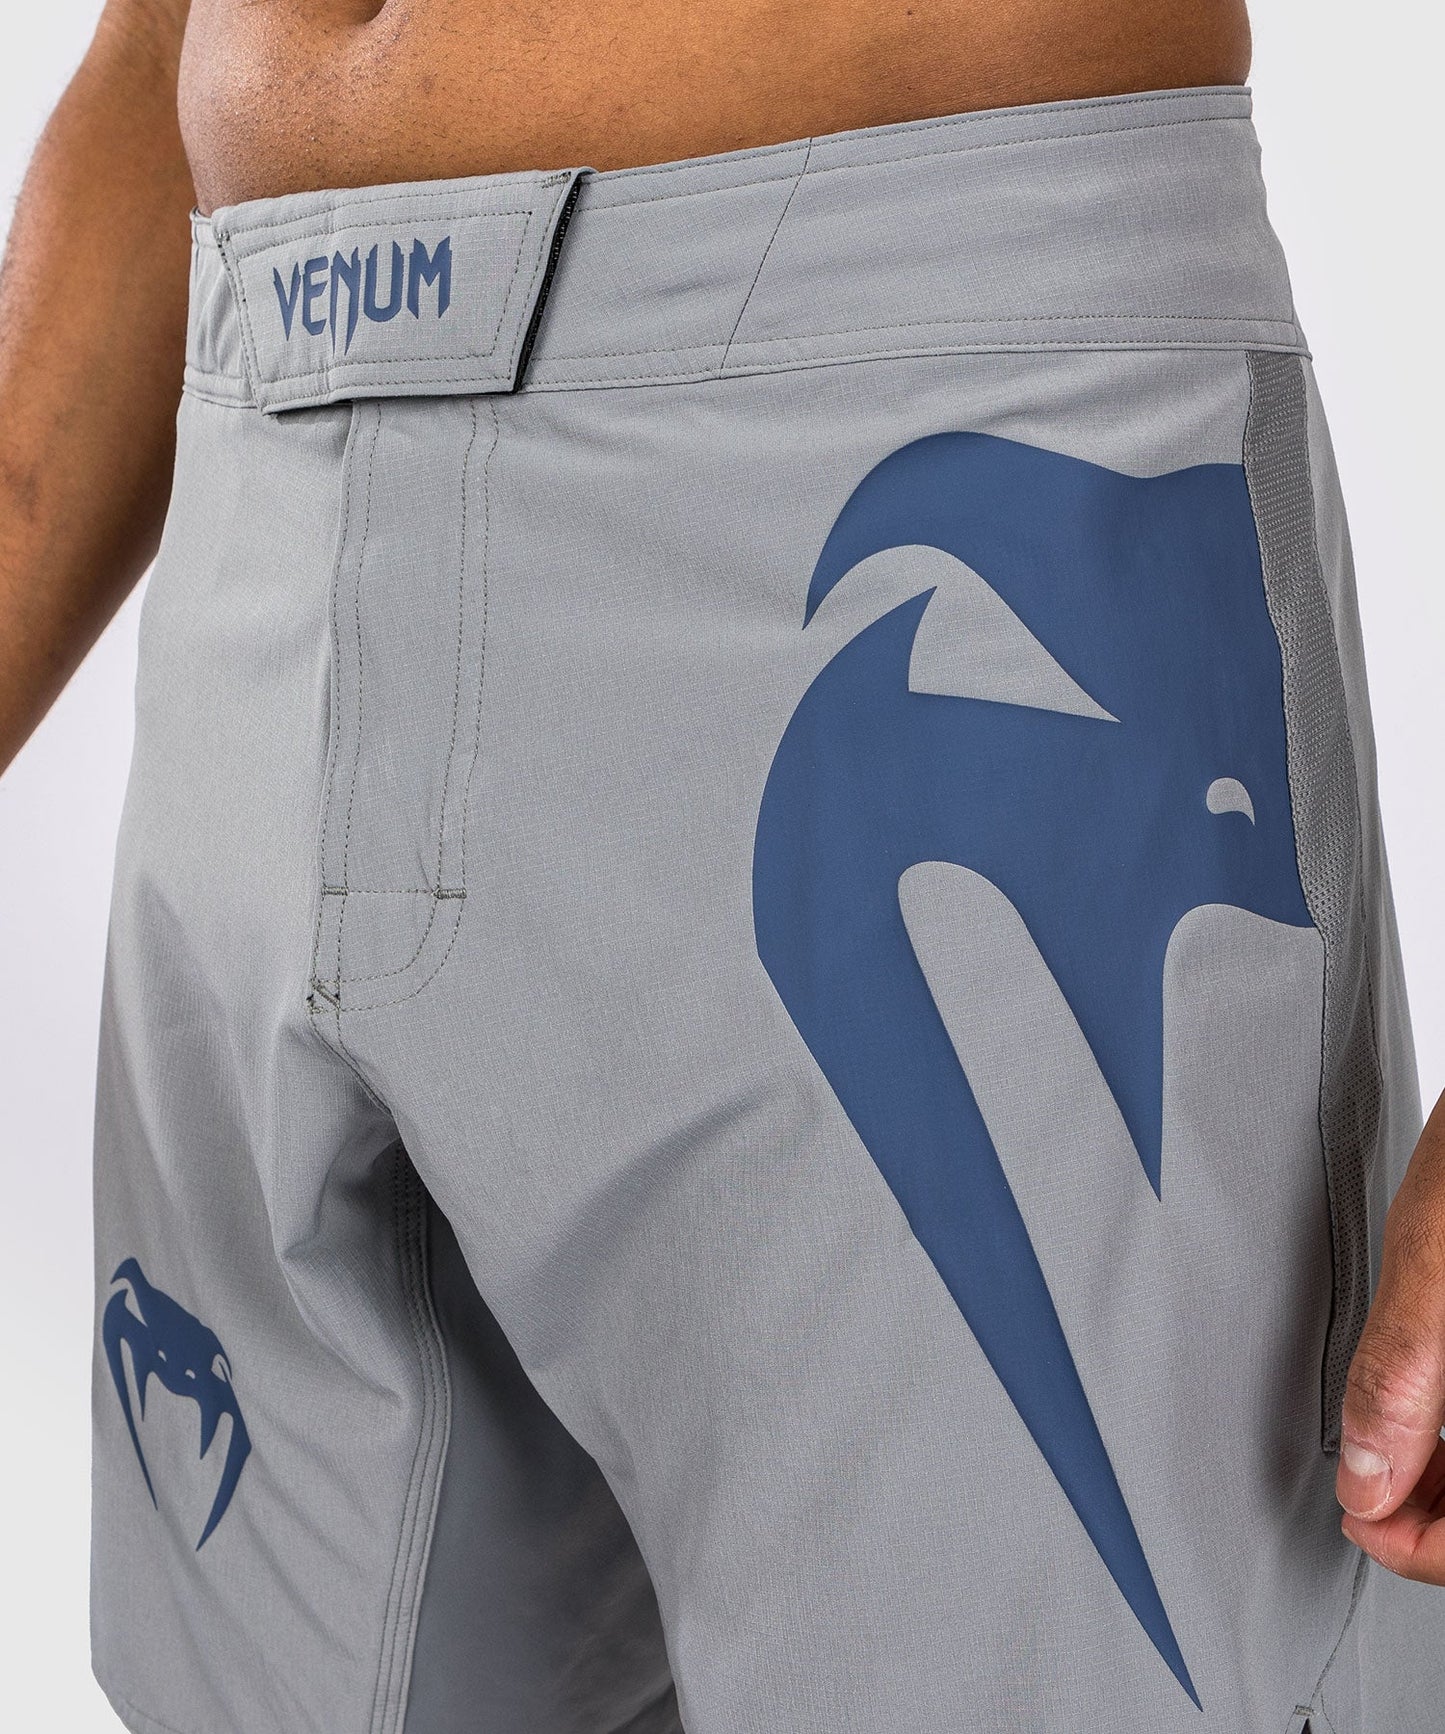 Venum Light 5.0 Pantalones cortos de lucha - Gris/Azul